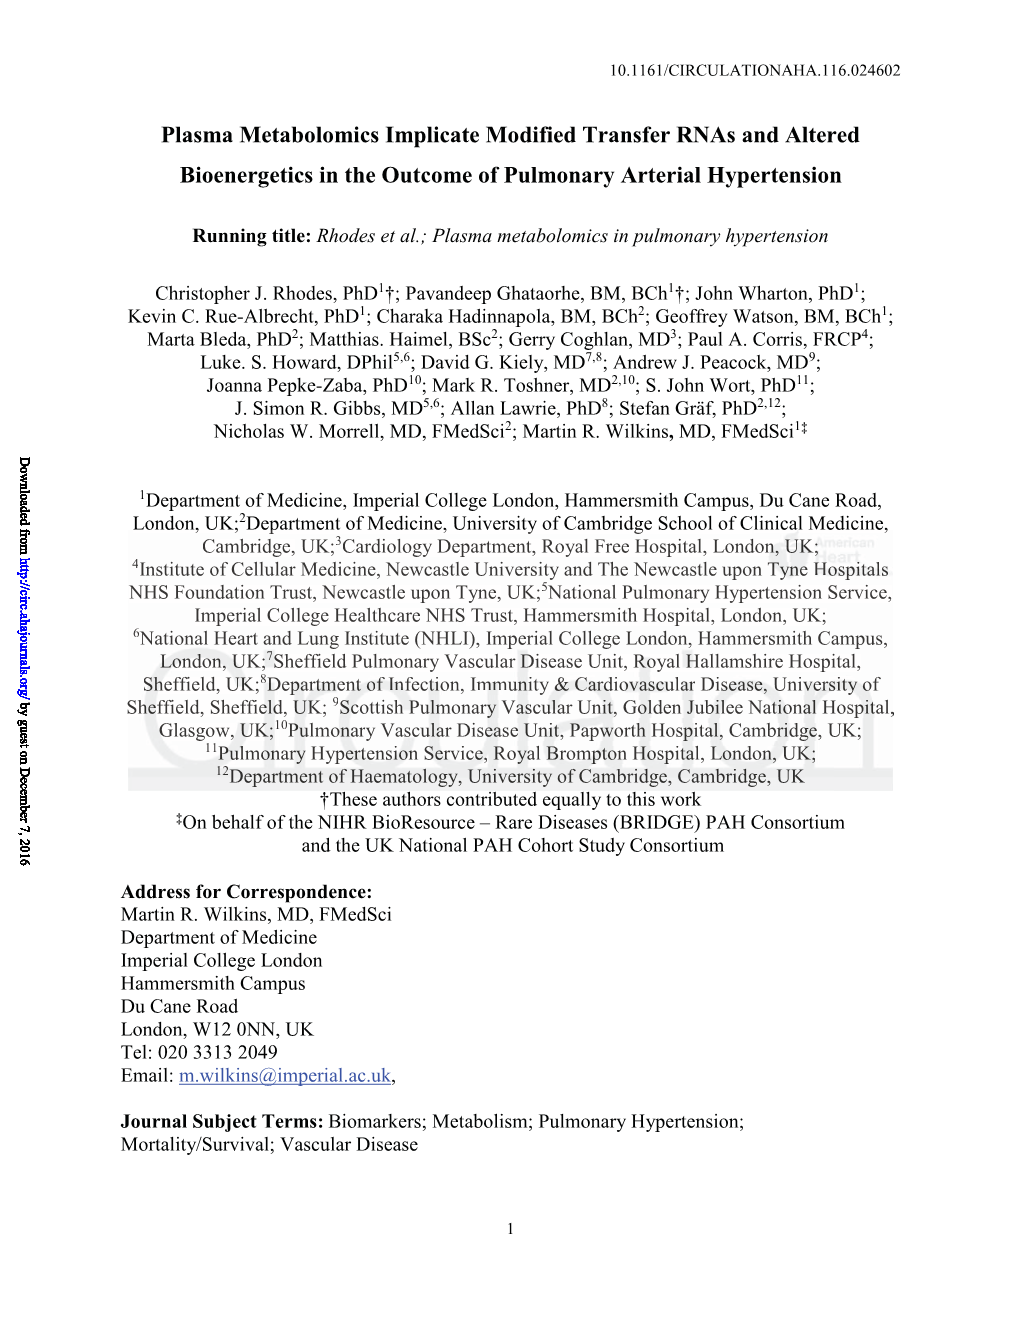 Plasma Metabolomics in Pulmonary Hypertension